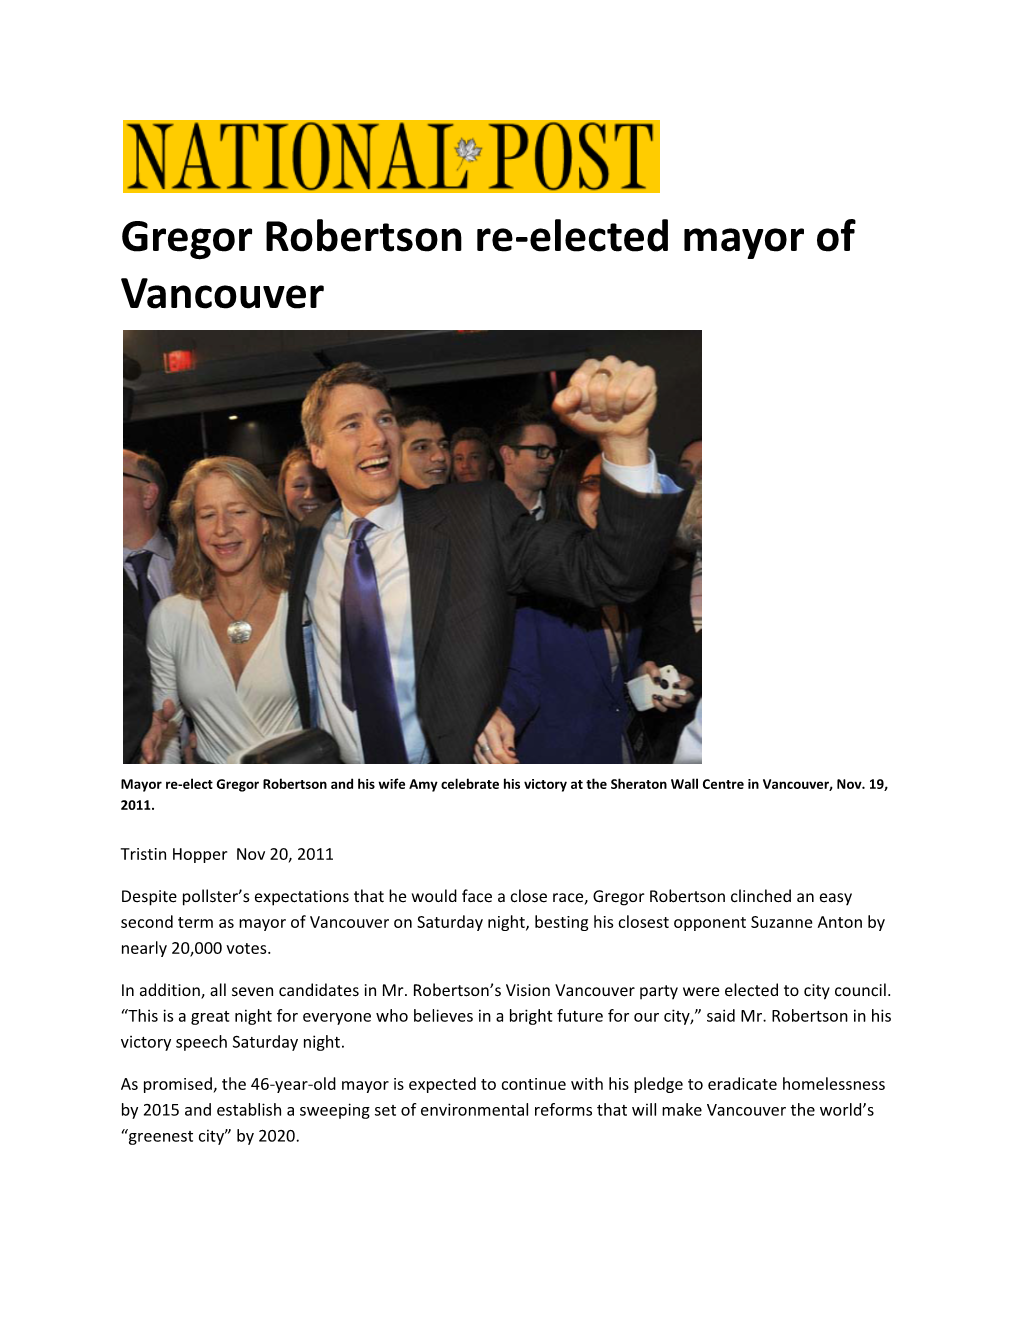 Gregor Robertson Re-Elected Mayor of Vancouver